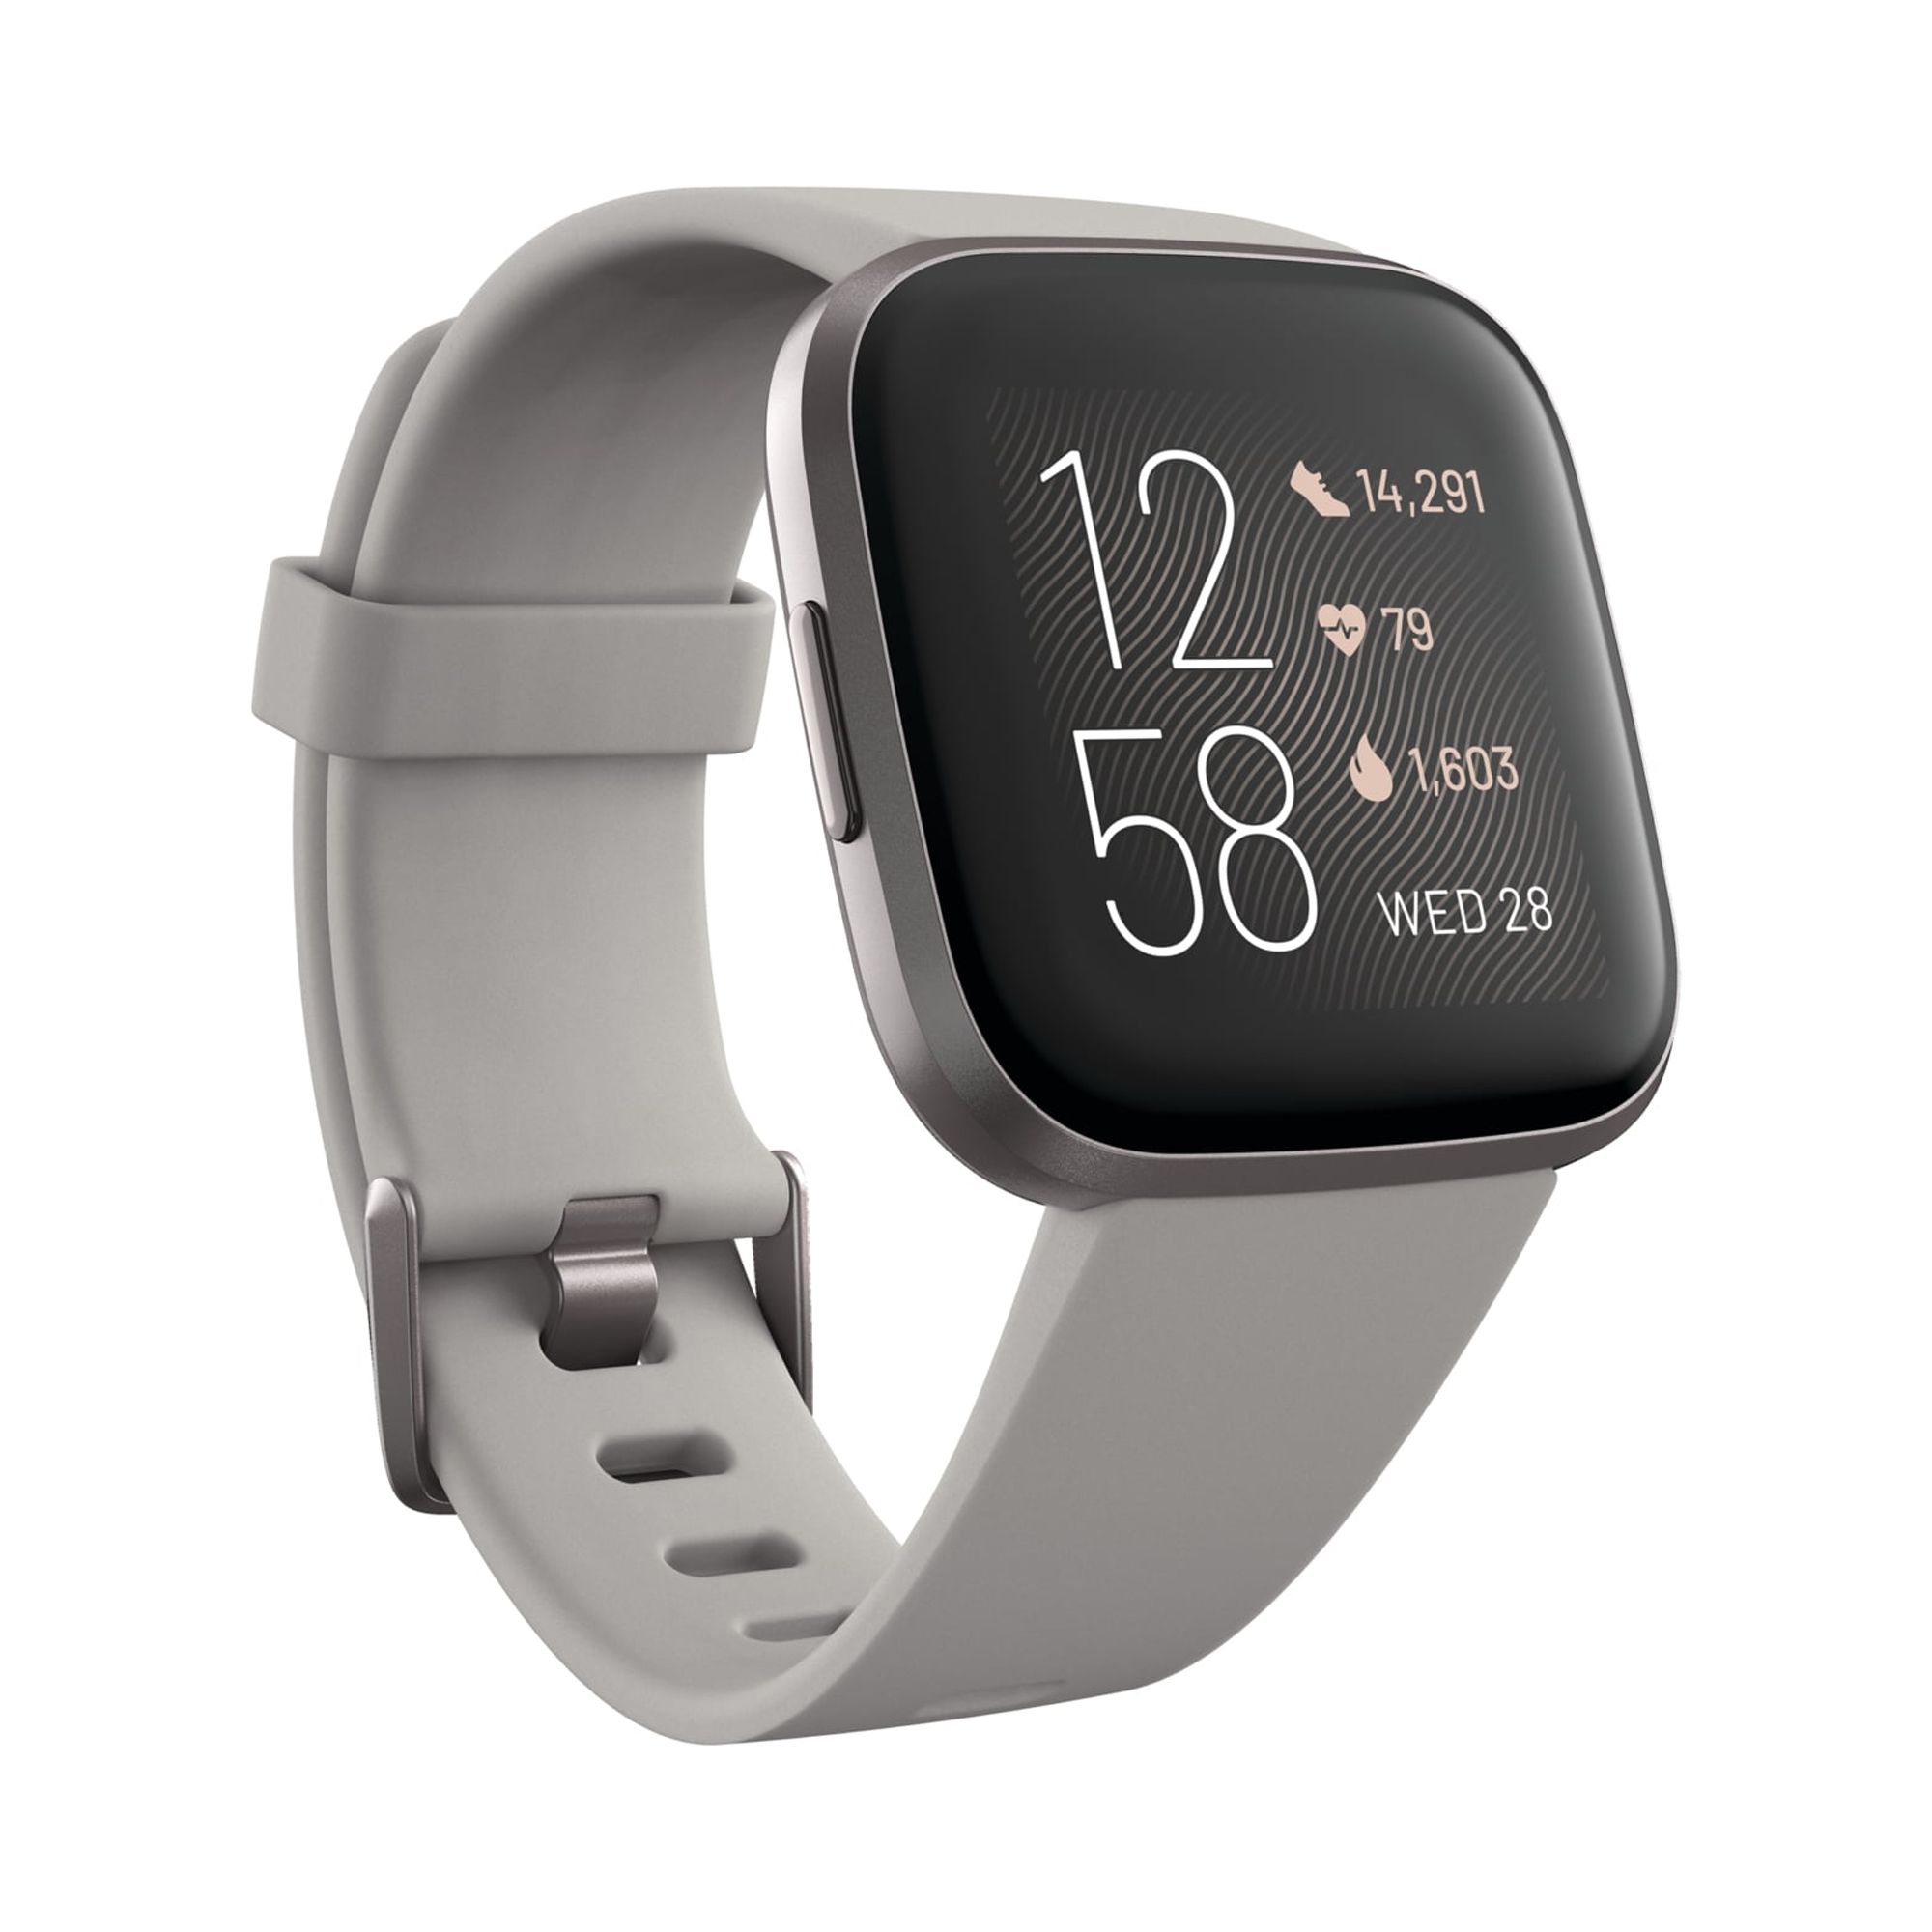 Fitbit Versa 2 Health & Fitness Smartwatch - Stone/Mist Grey Aluminum - image 1 of 7